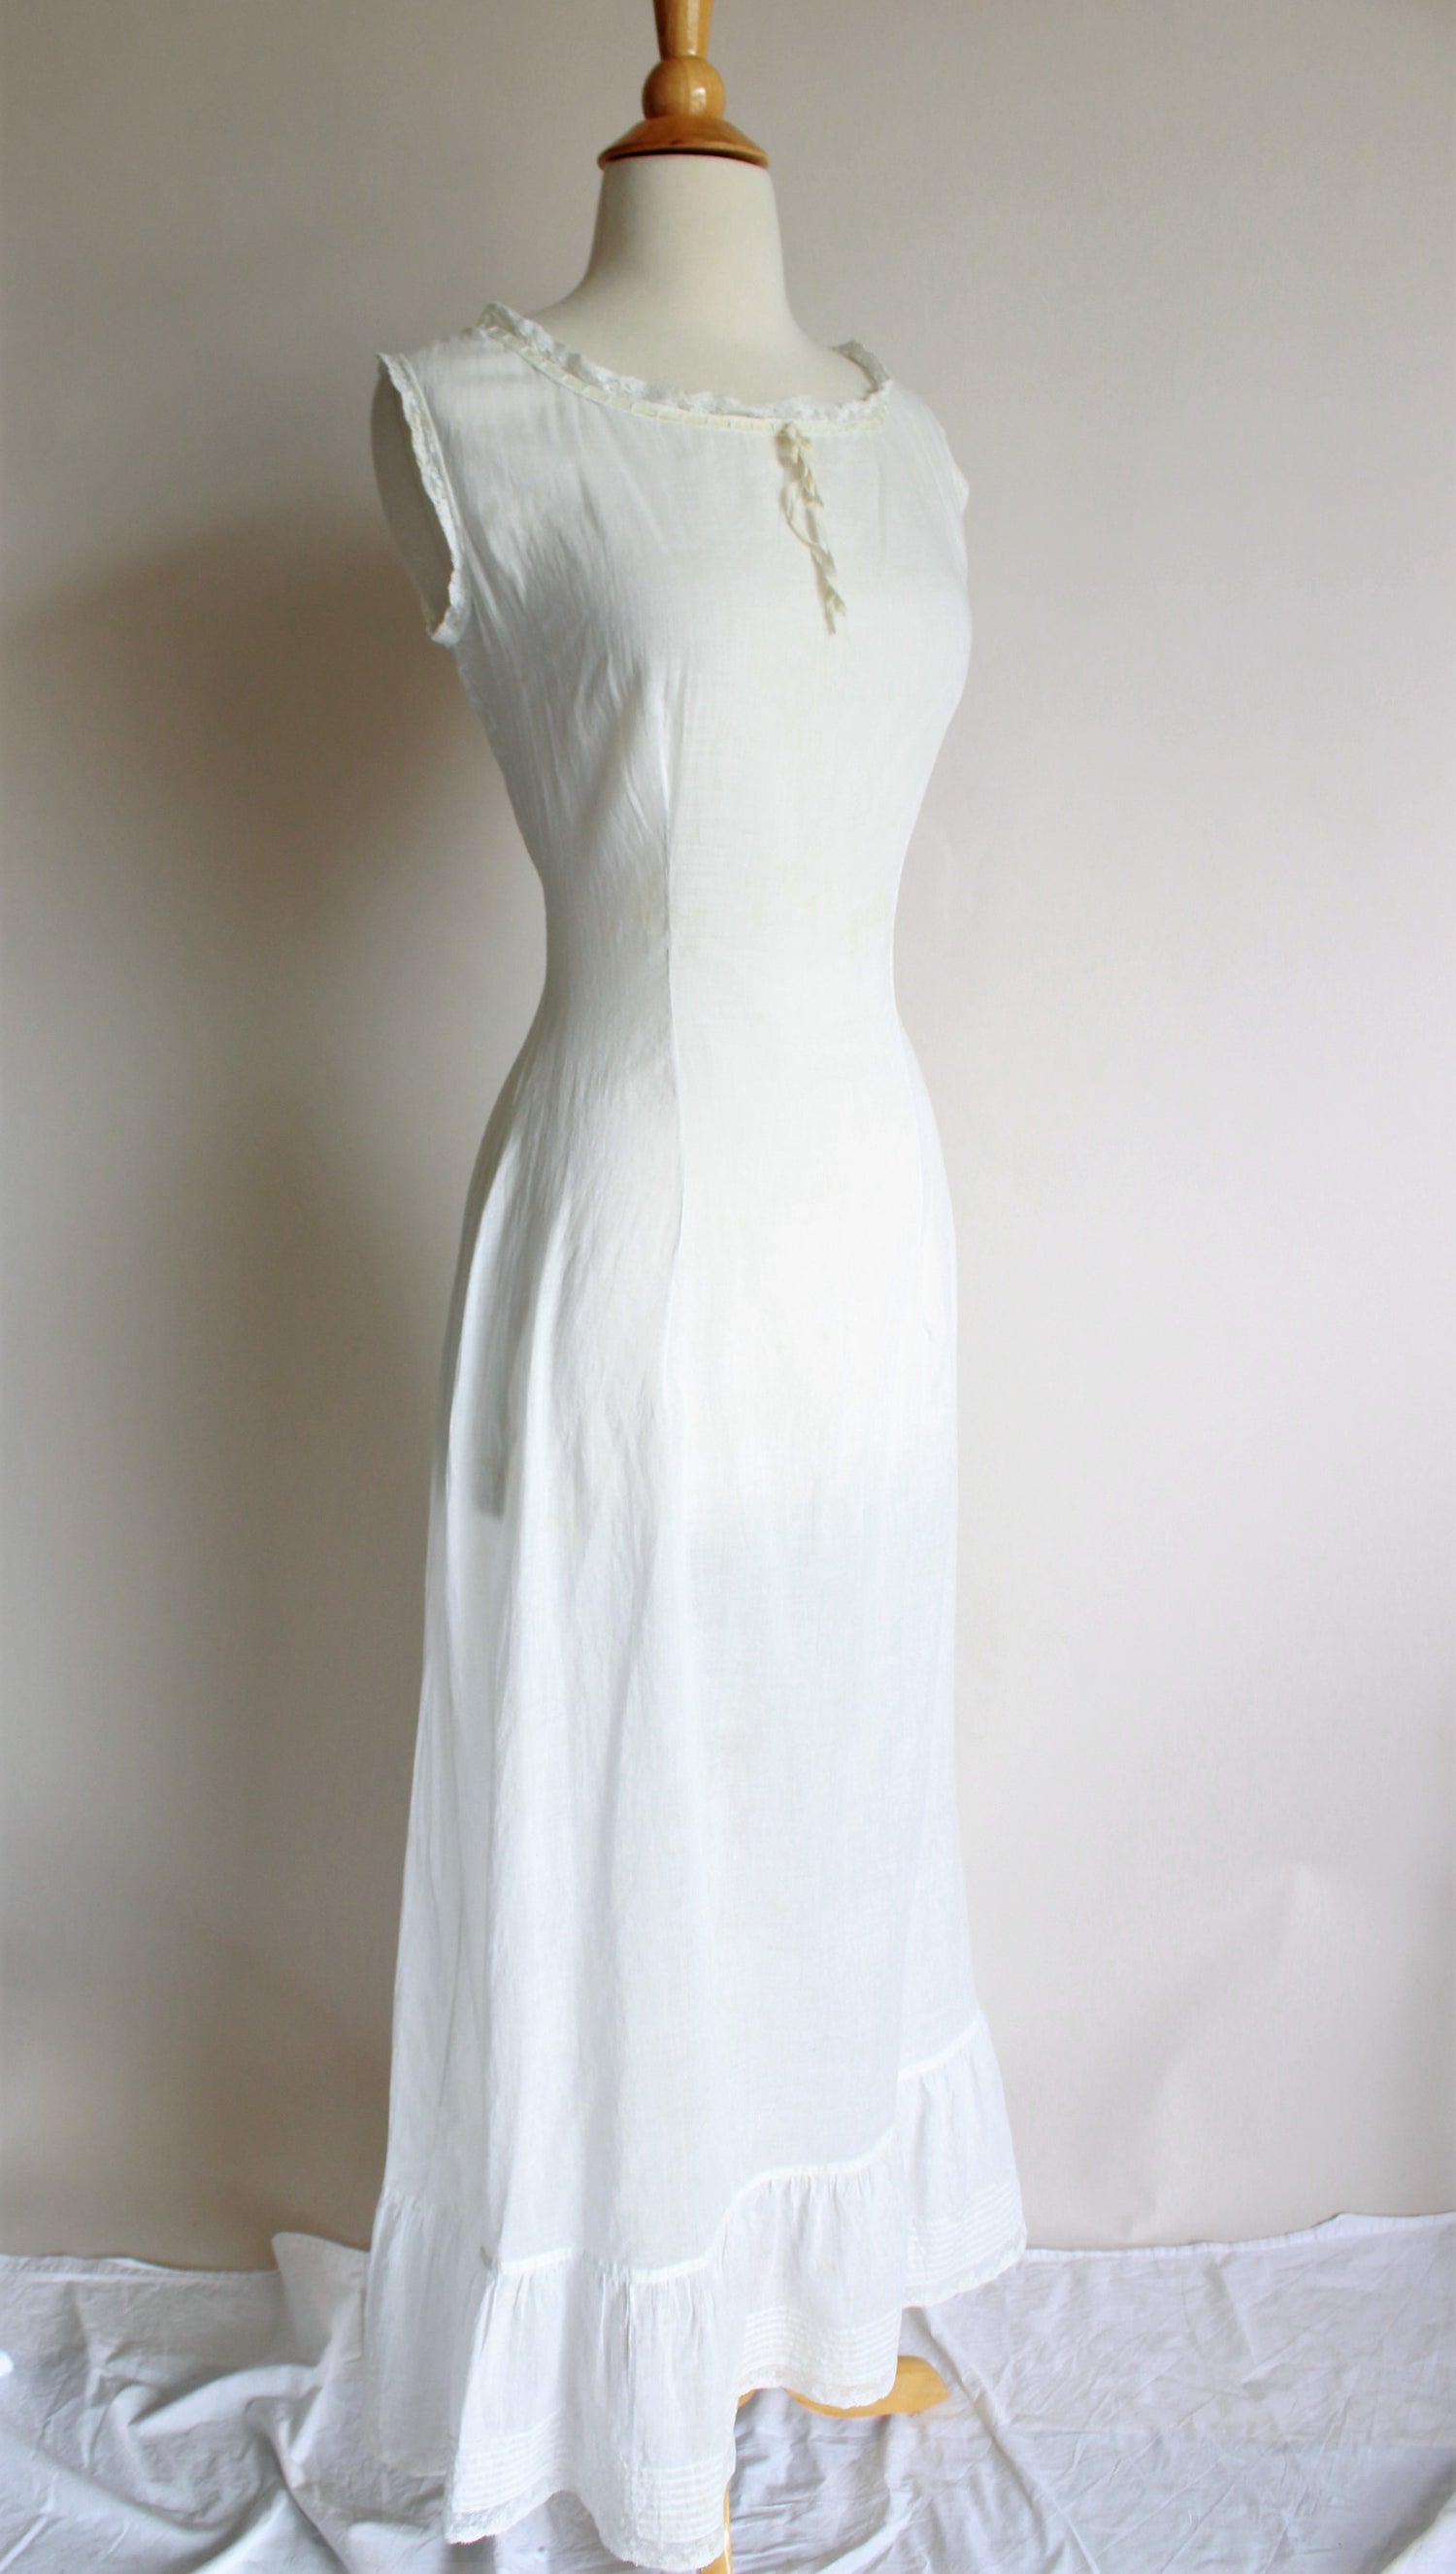 Antique Edwardian White Cotton Chemise Nightgown